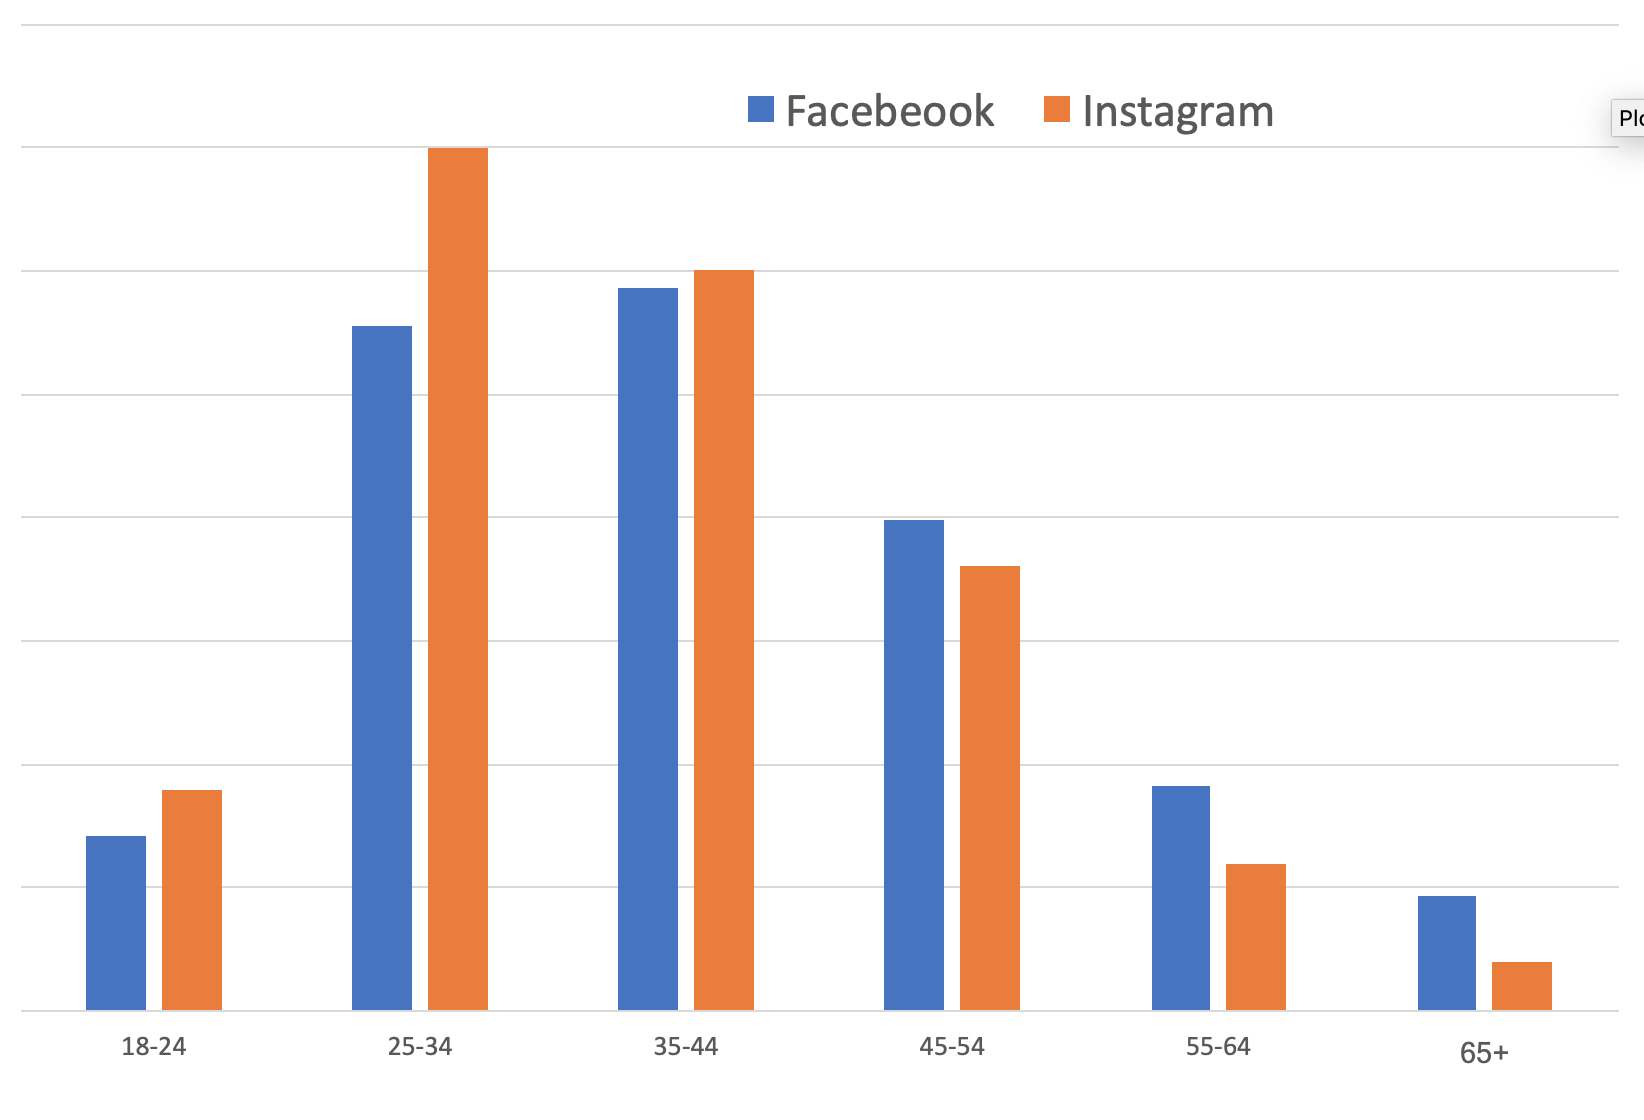 Statistiques pour Facebook et Instagram